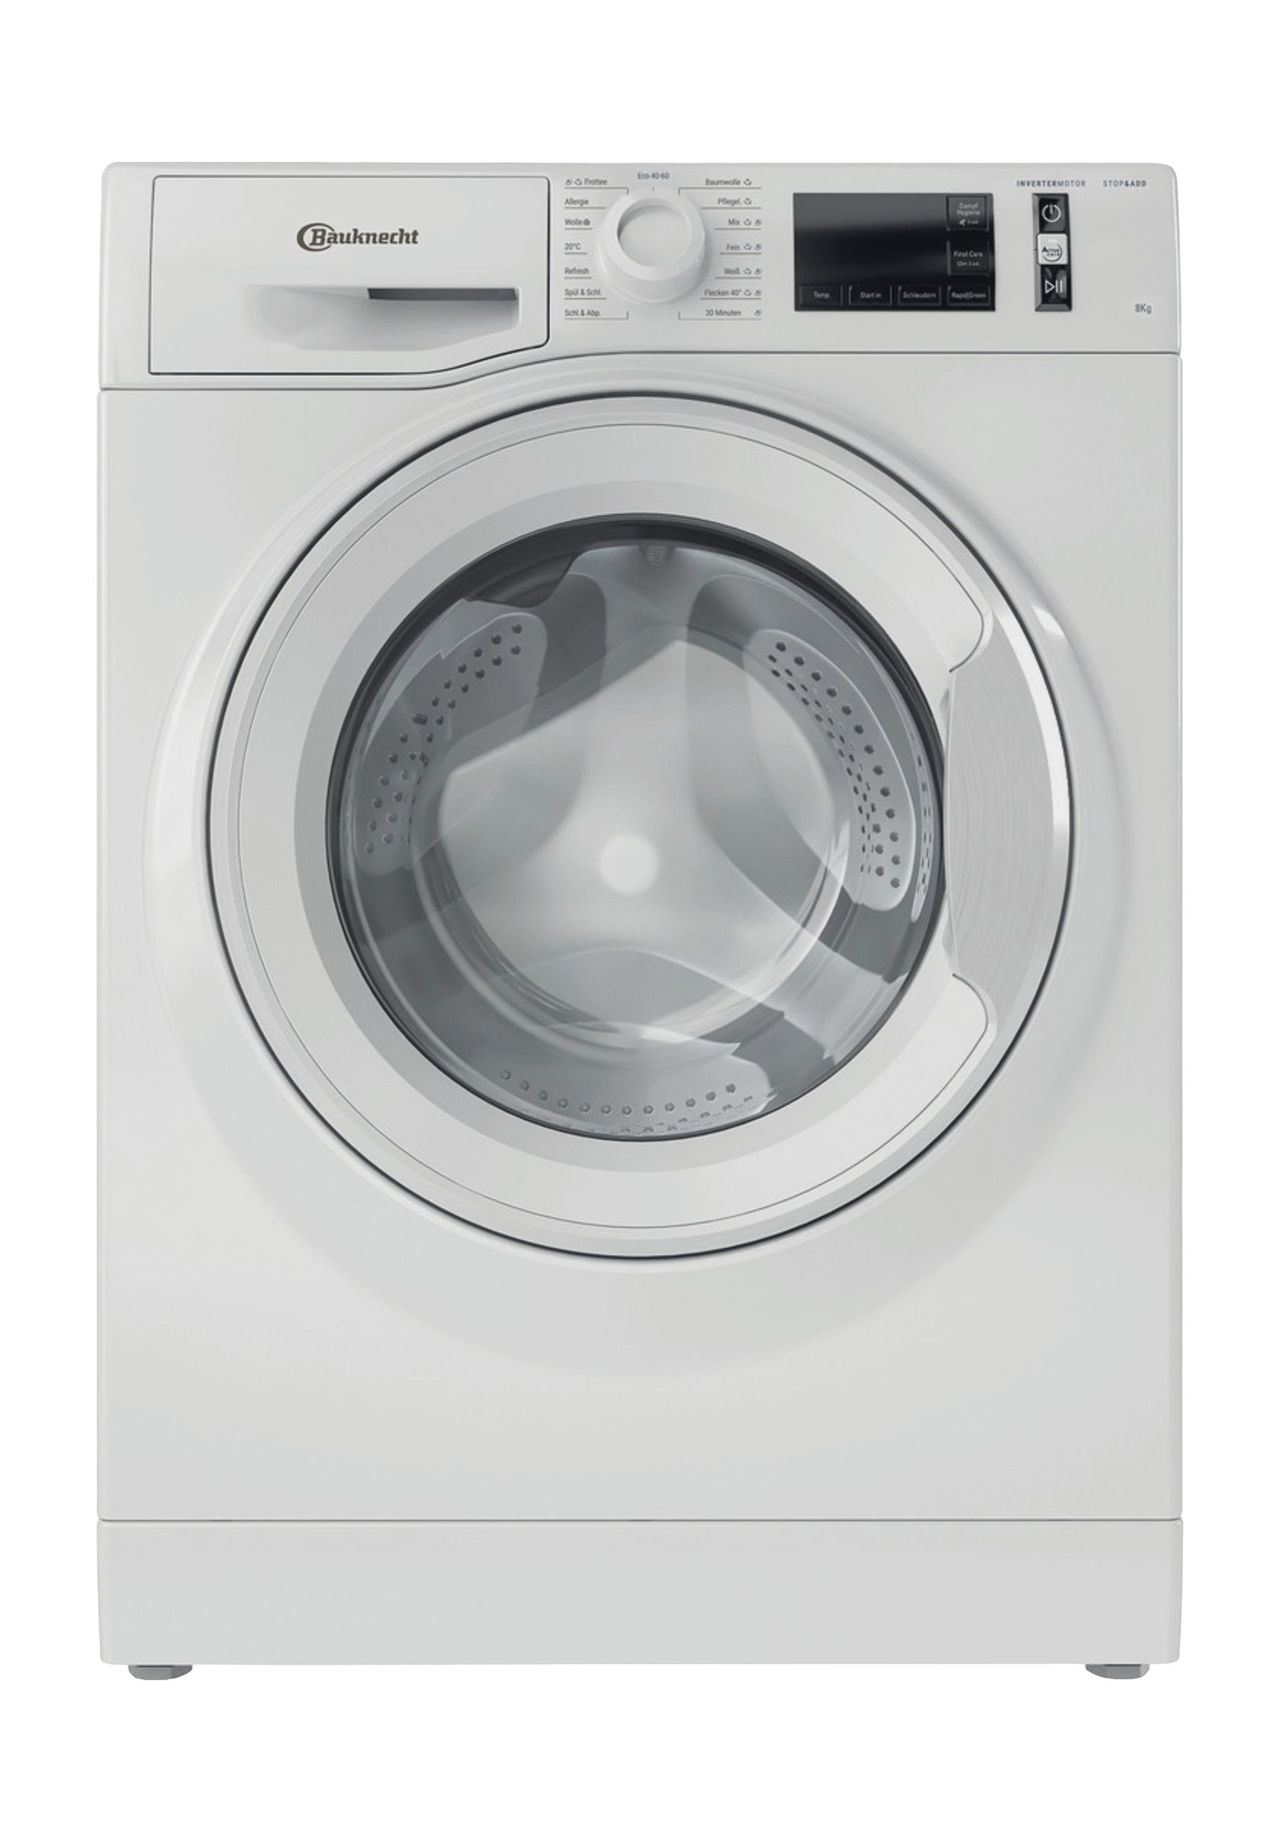 Bauknecht Waschmaschine WM Eco Style 8A, 1400 U/min. | GALERIA